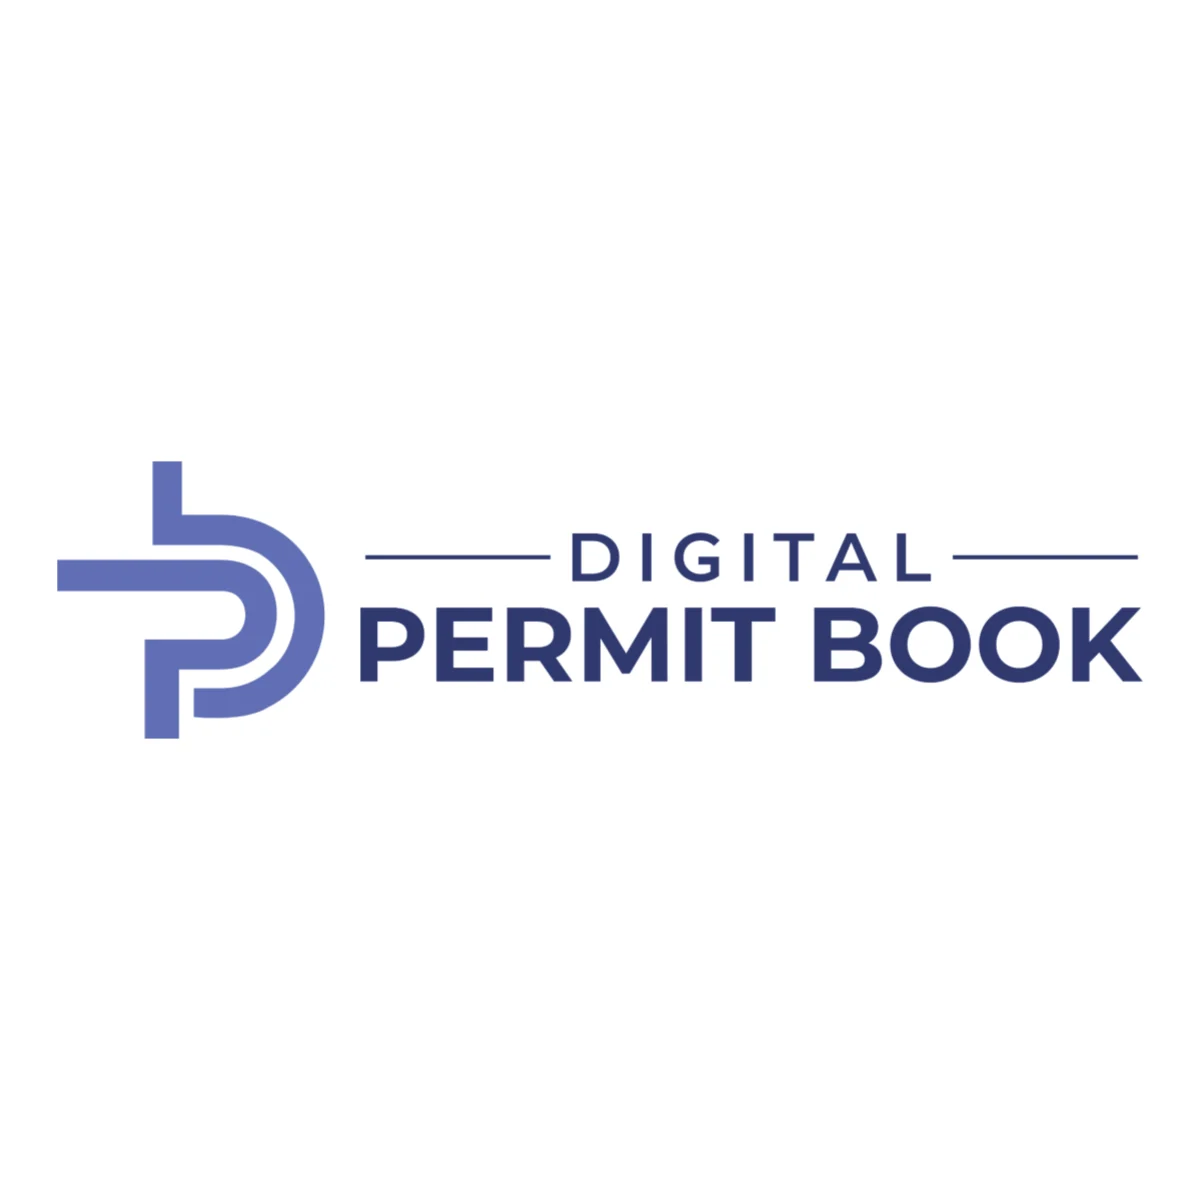 Digital Permit Book